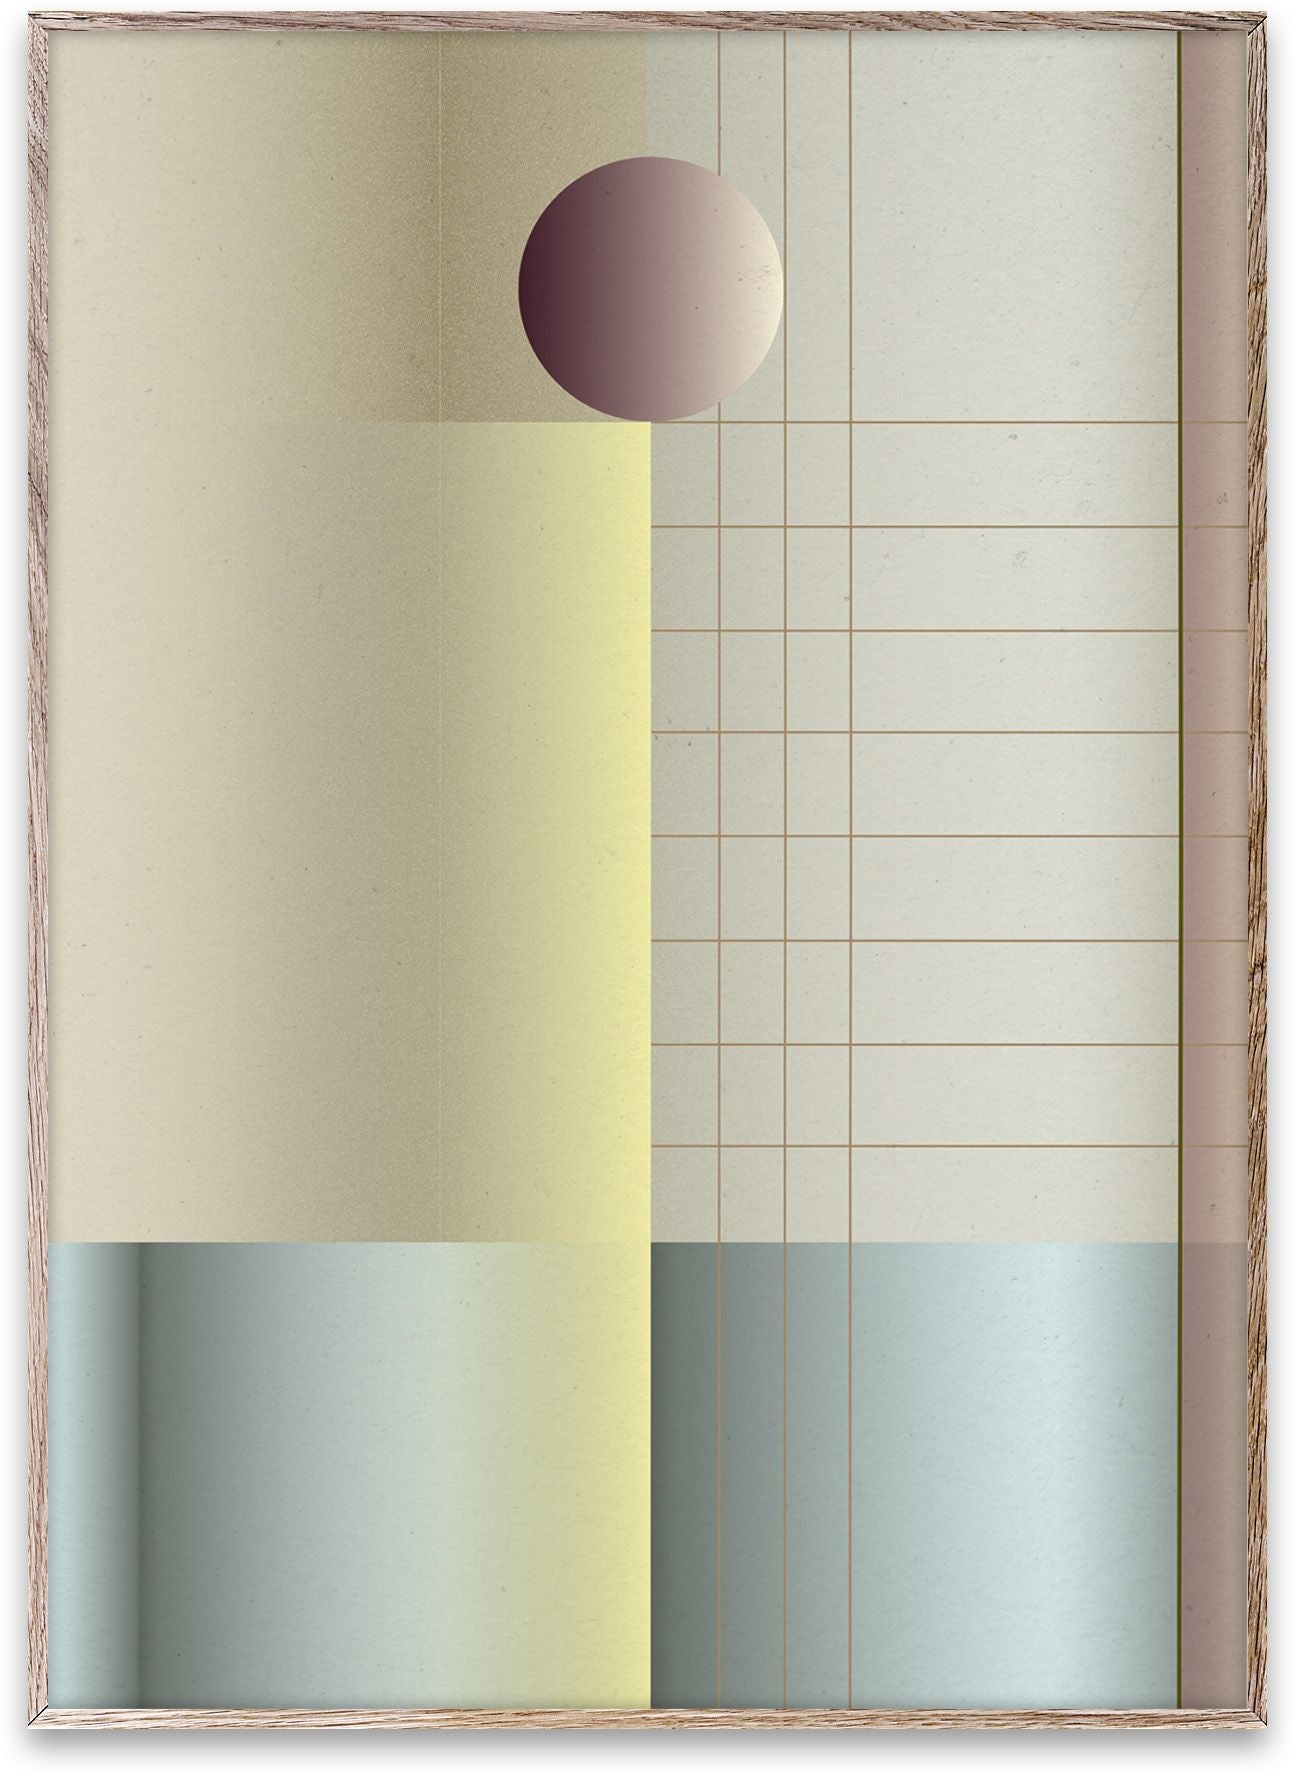 Paper Collective Semblance 03 plakat, 70x100 cm